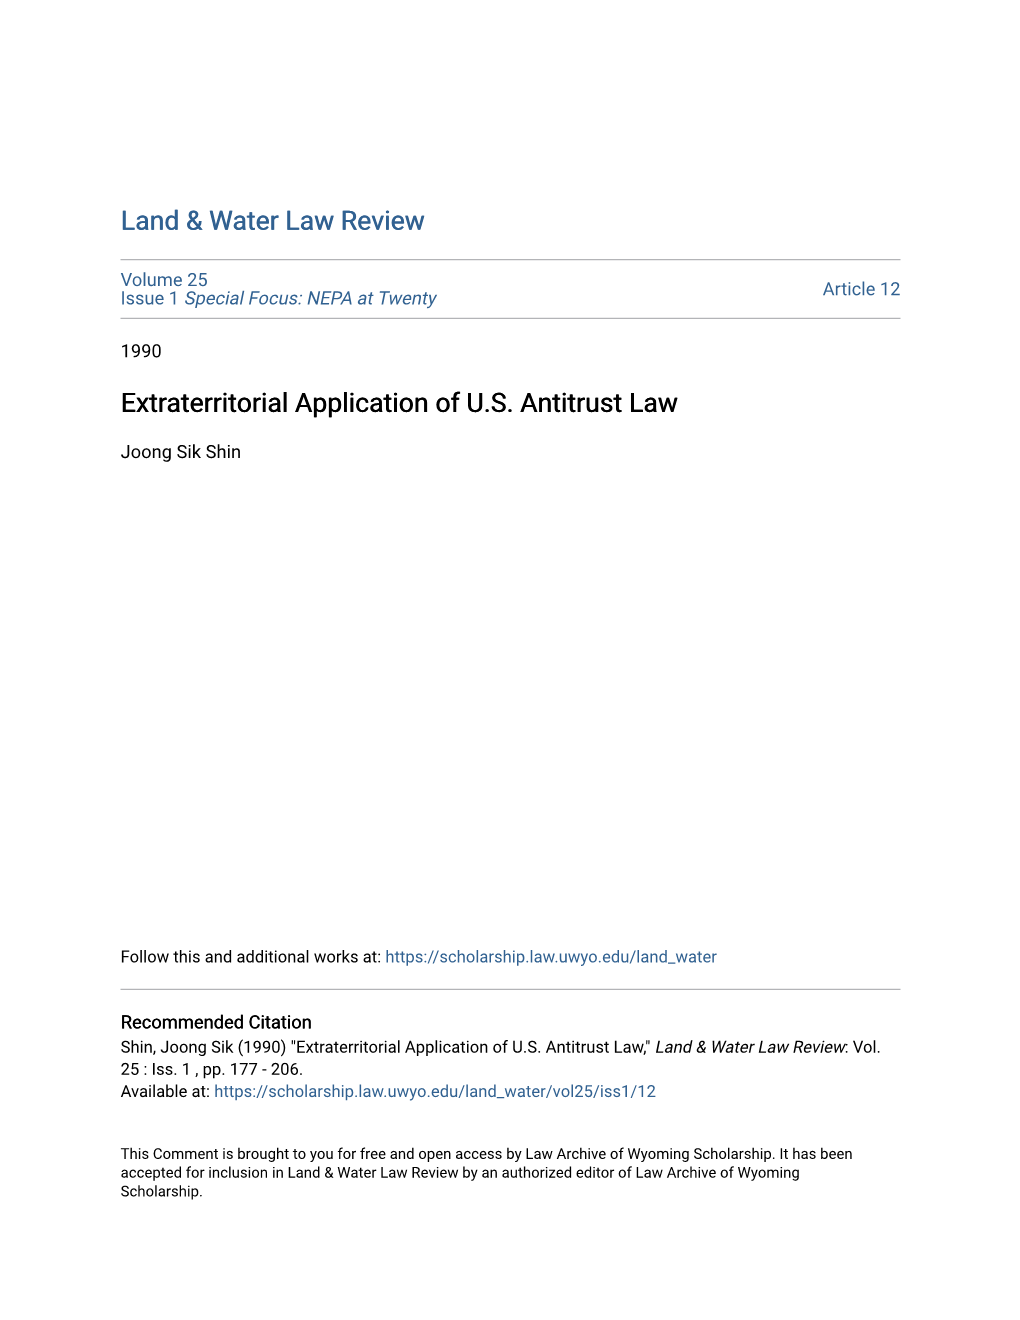 Extraterritorial Application of U.S. Antitrust Law